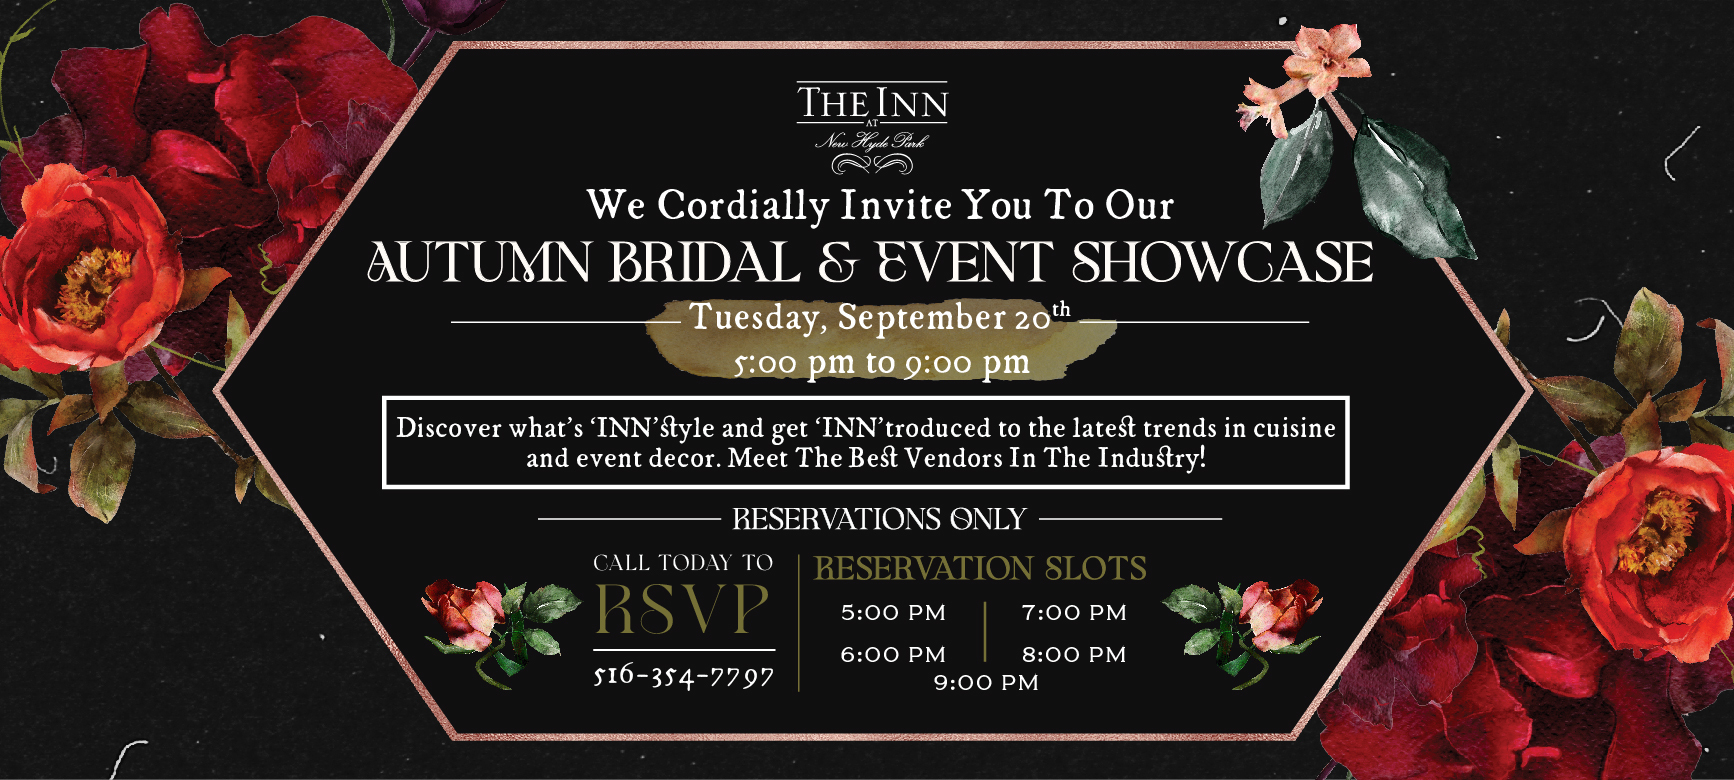 Autumn Bridal & Event Showcase